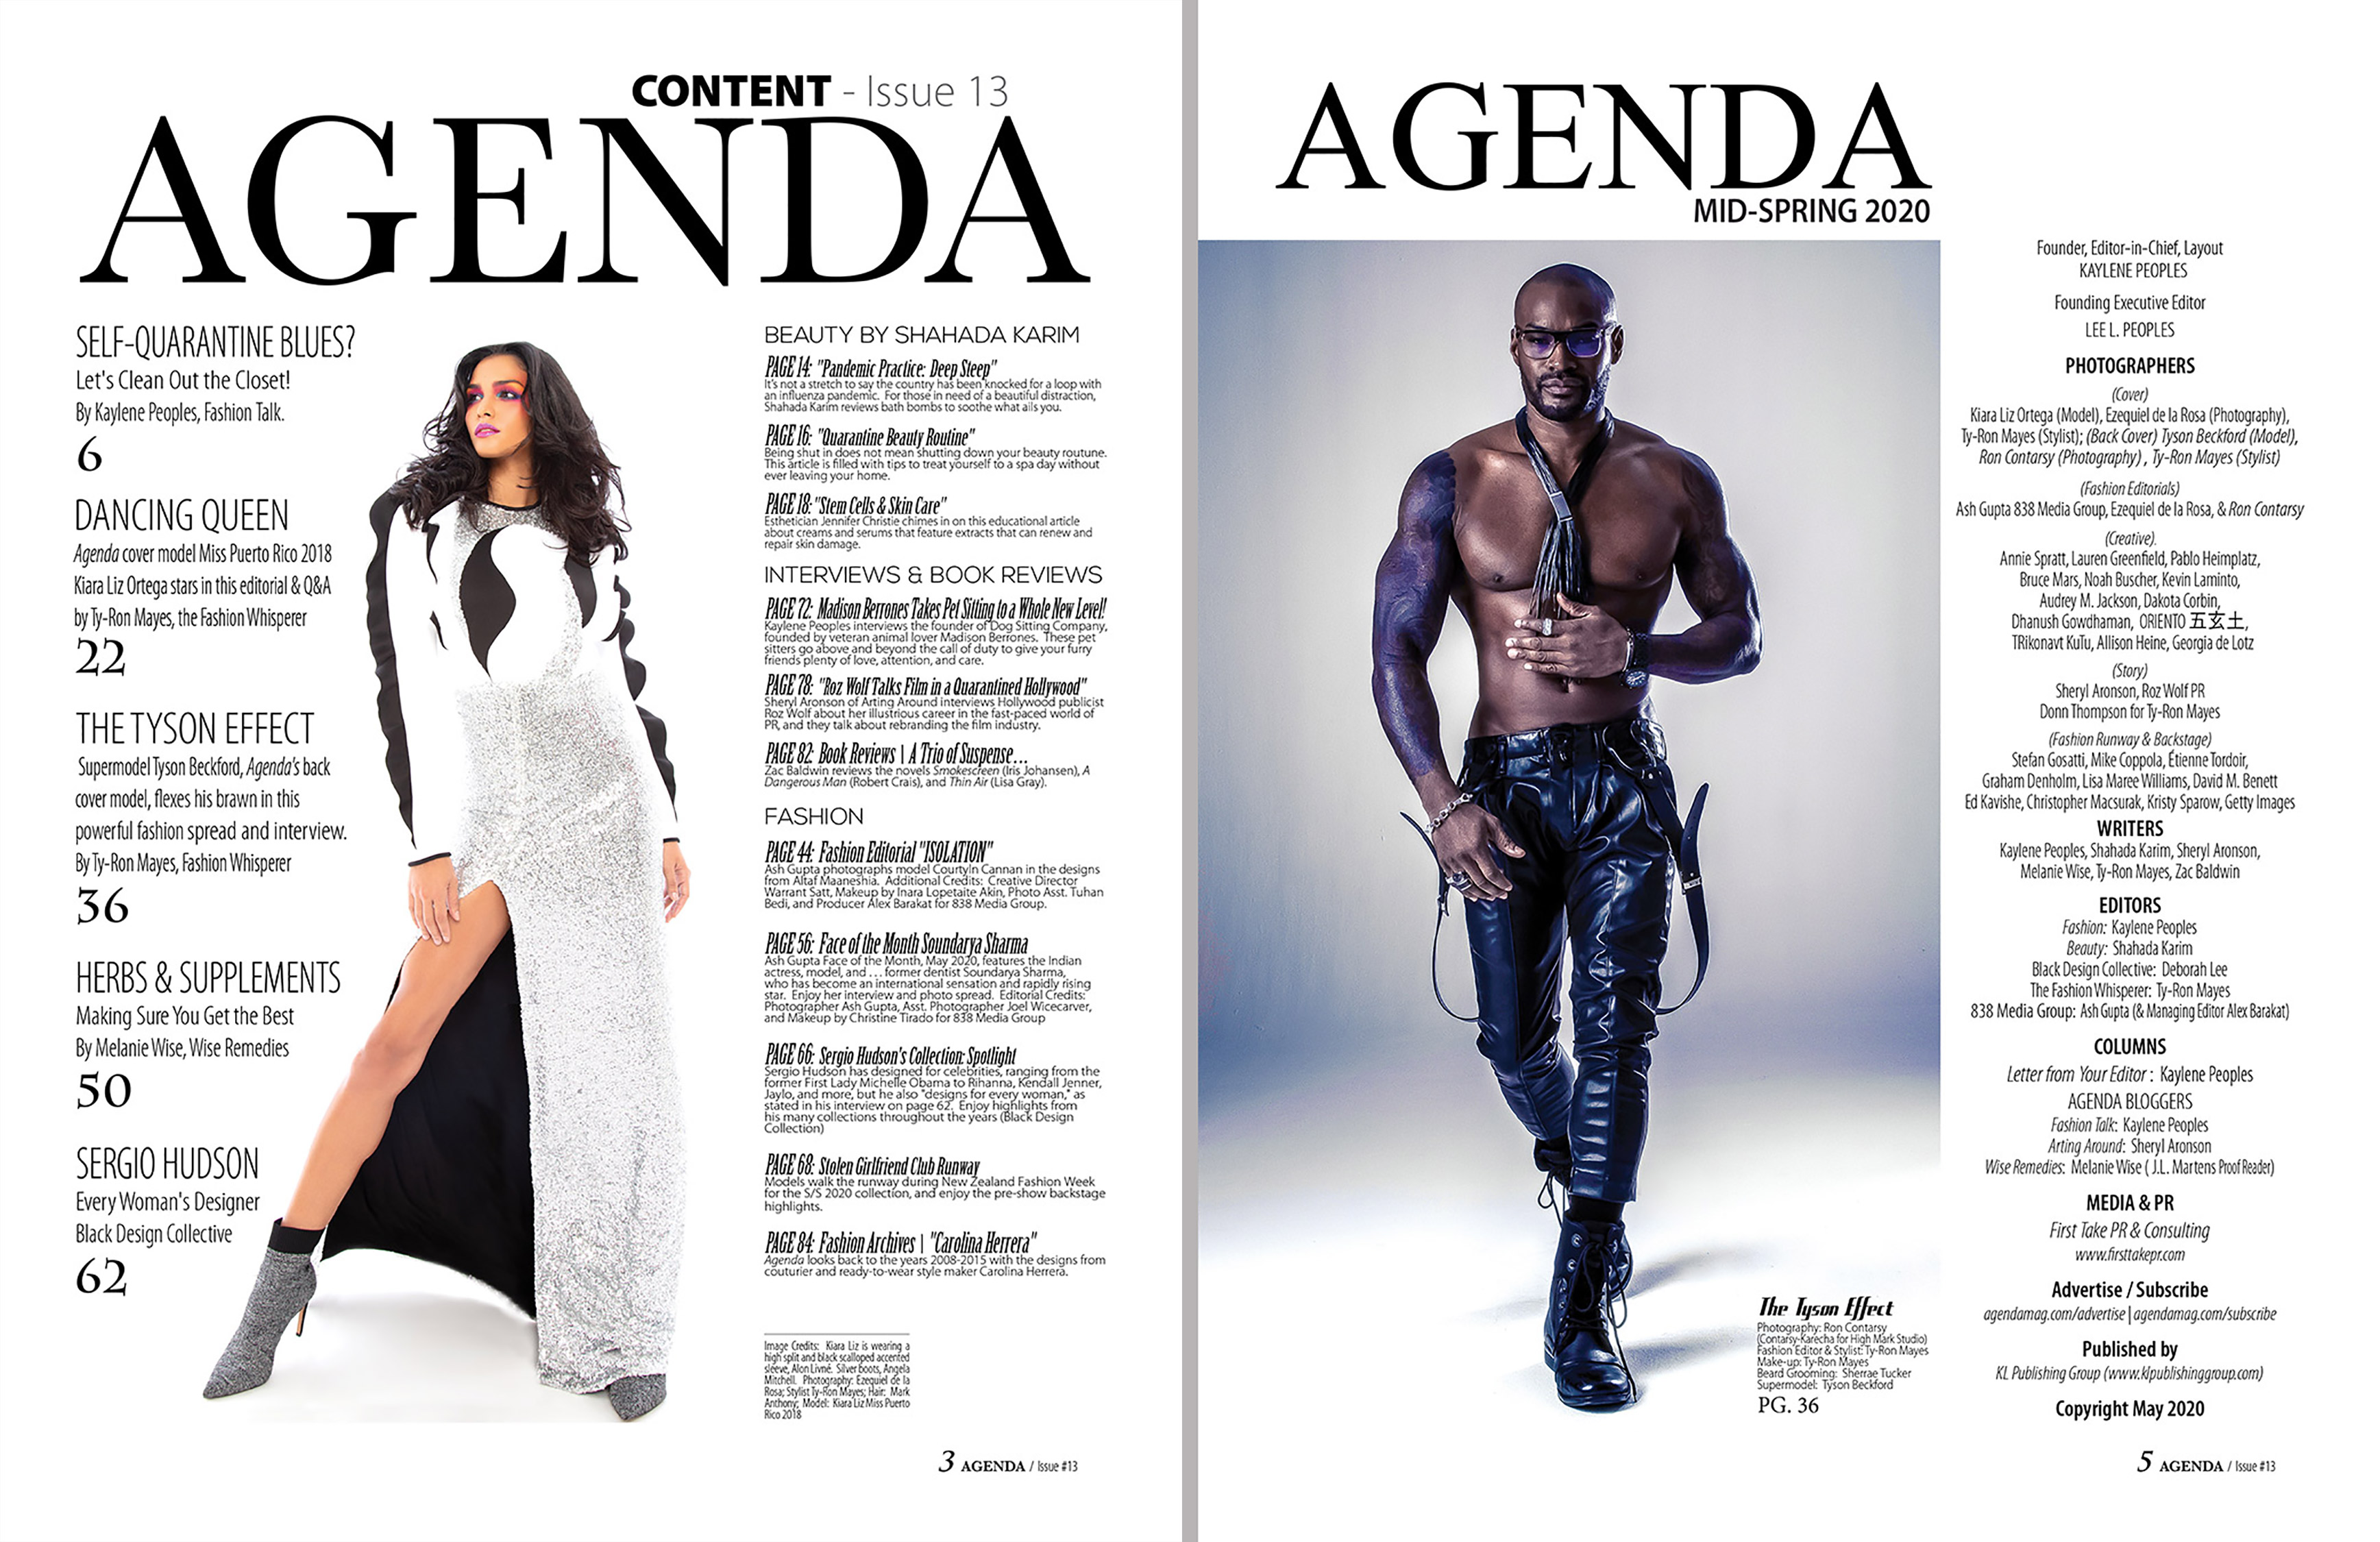 AGENDA-ISSUE-13-Contents-Masthead-Kiara-Liz-Tyson-Beckford